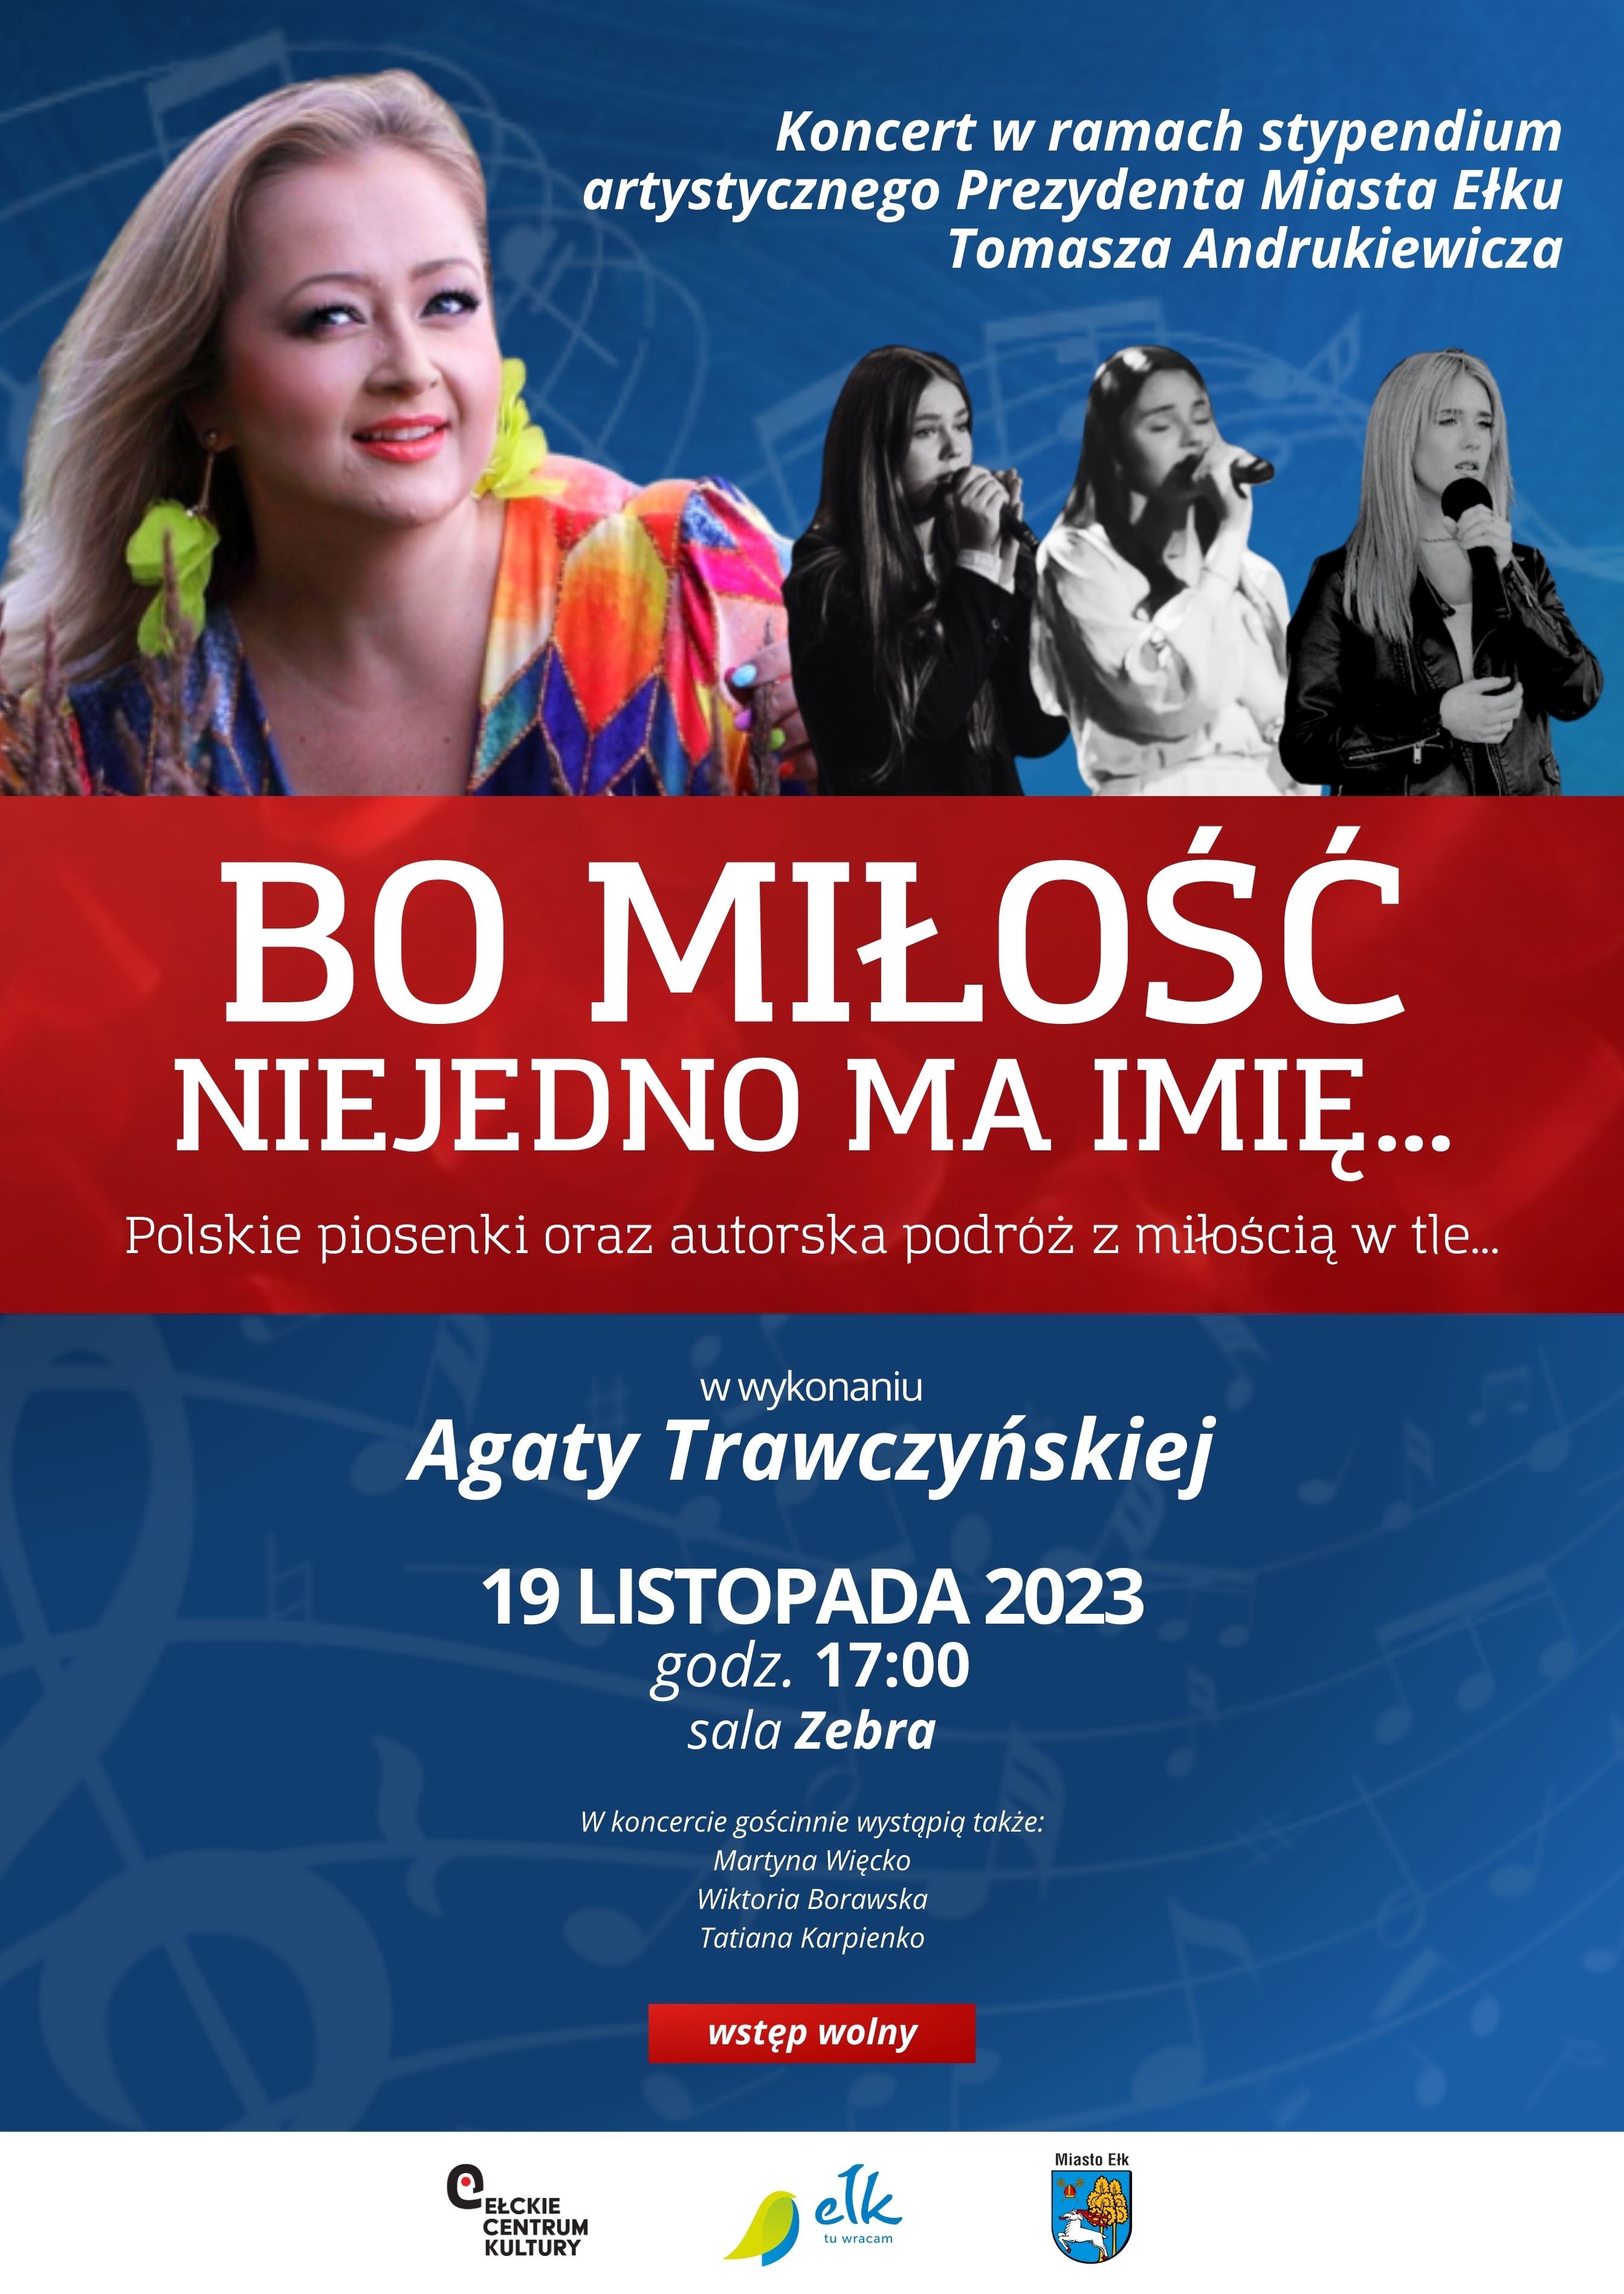 "For love has many names..." Agata Trawczyńska's scholarship concert